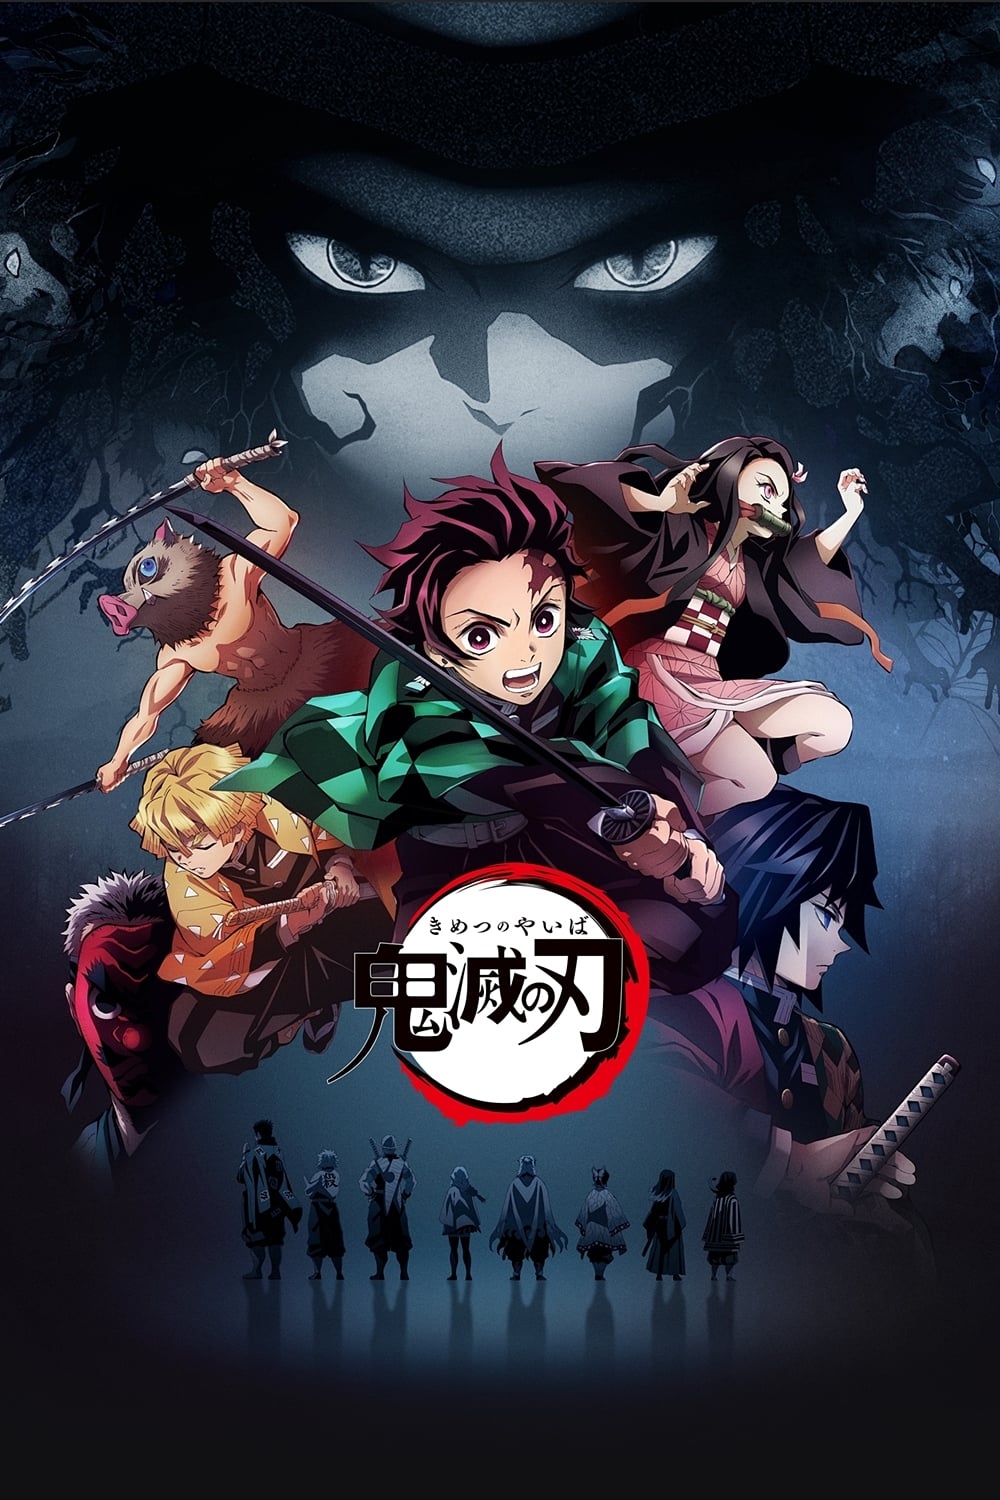 Assistir Kimetsu no Yaiba (Demon Slayer) Online - Animes Online